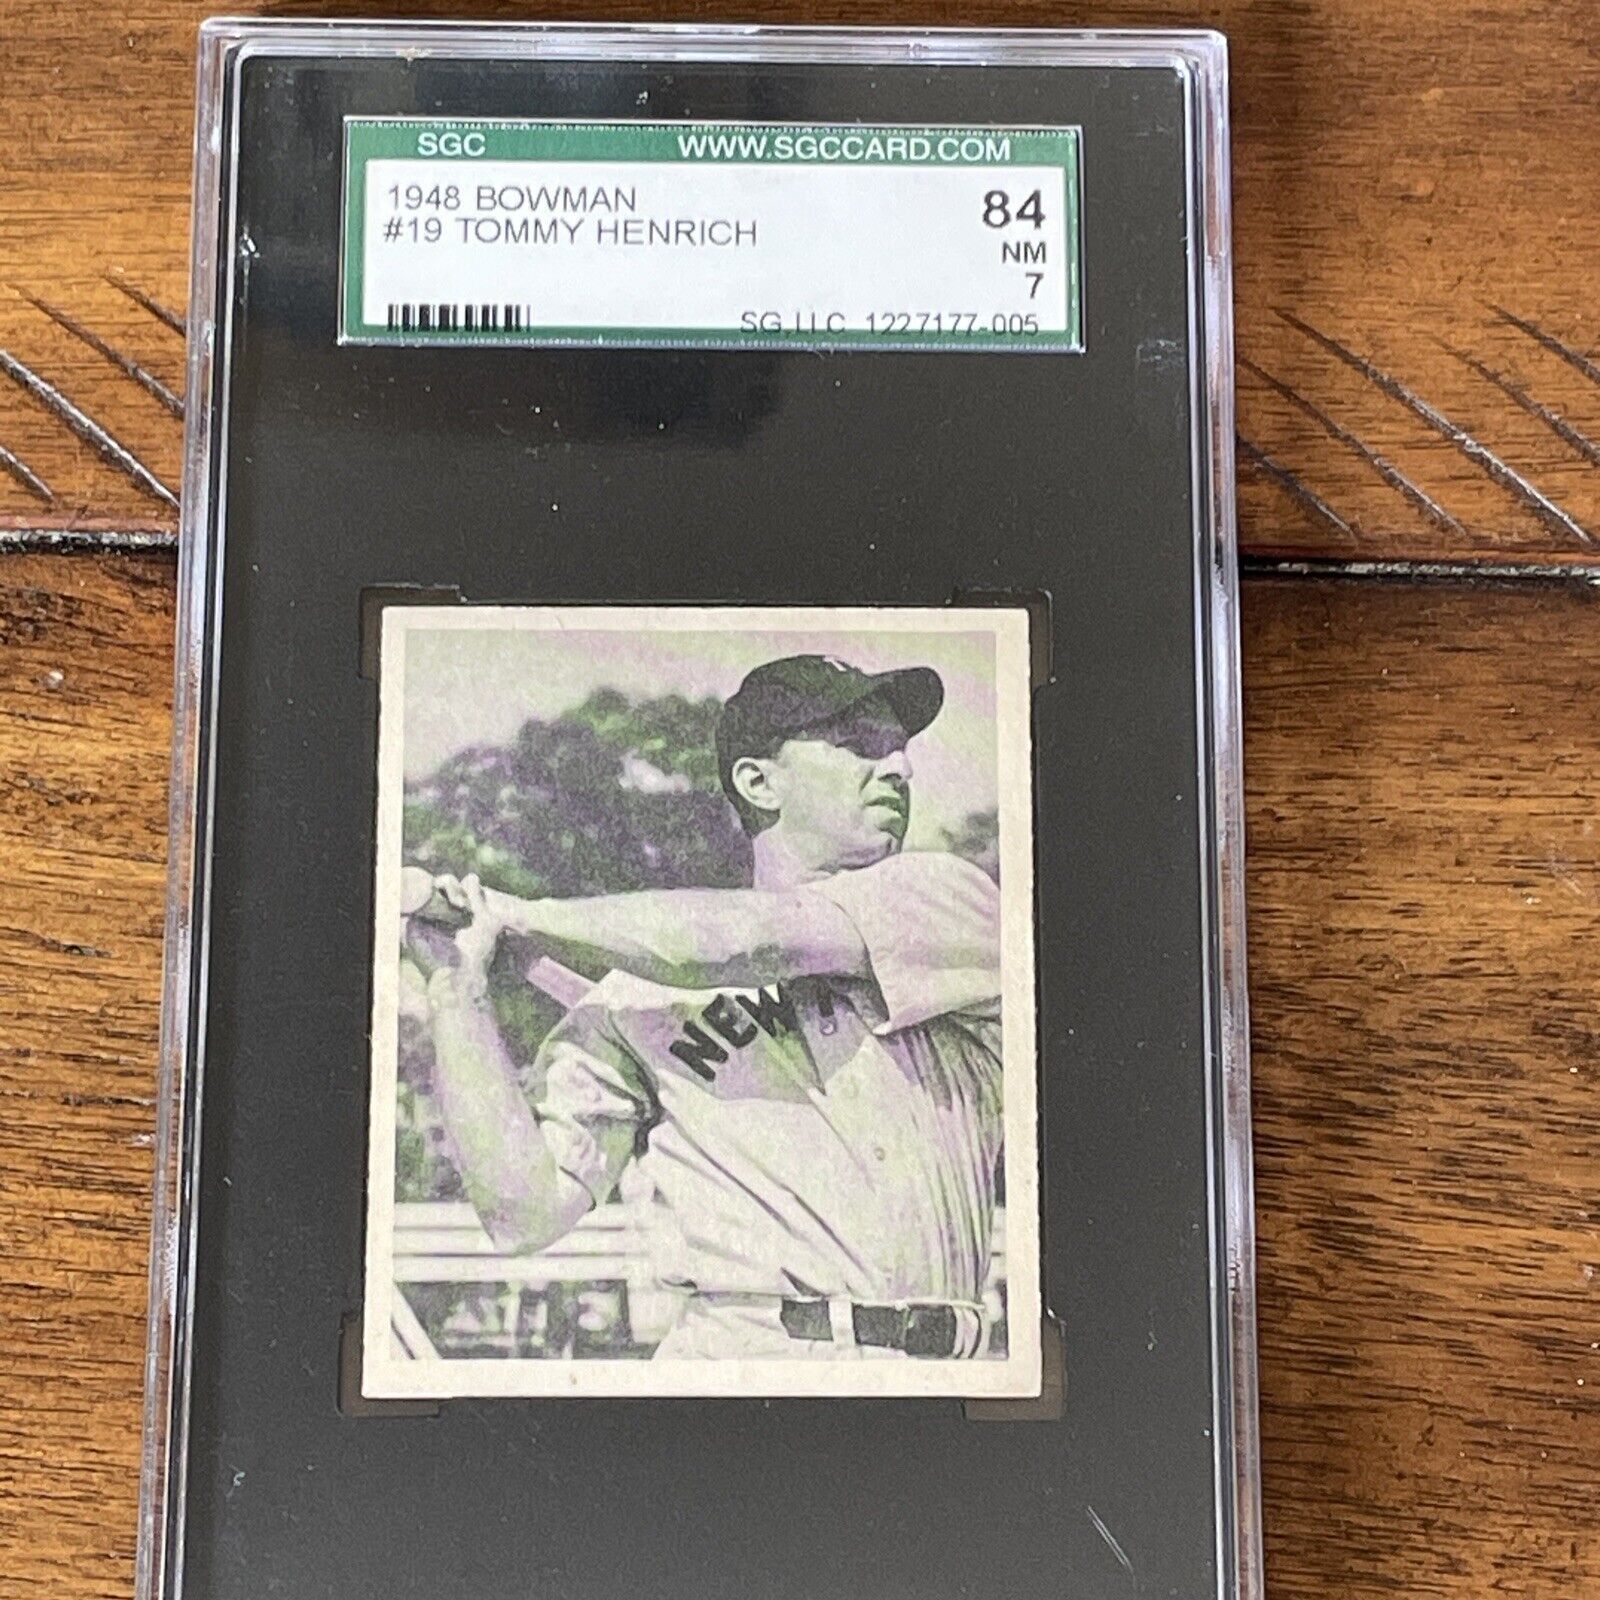 1948 Bowman #19 Tommy Henrich New York Yankees SGC 7